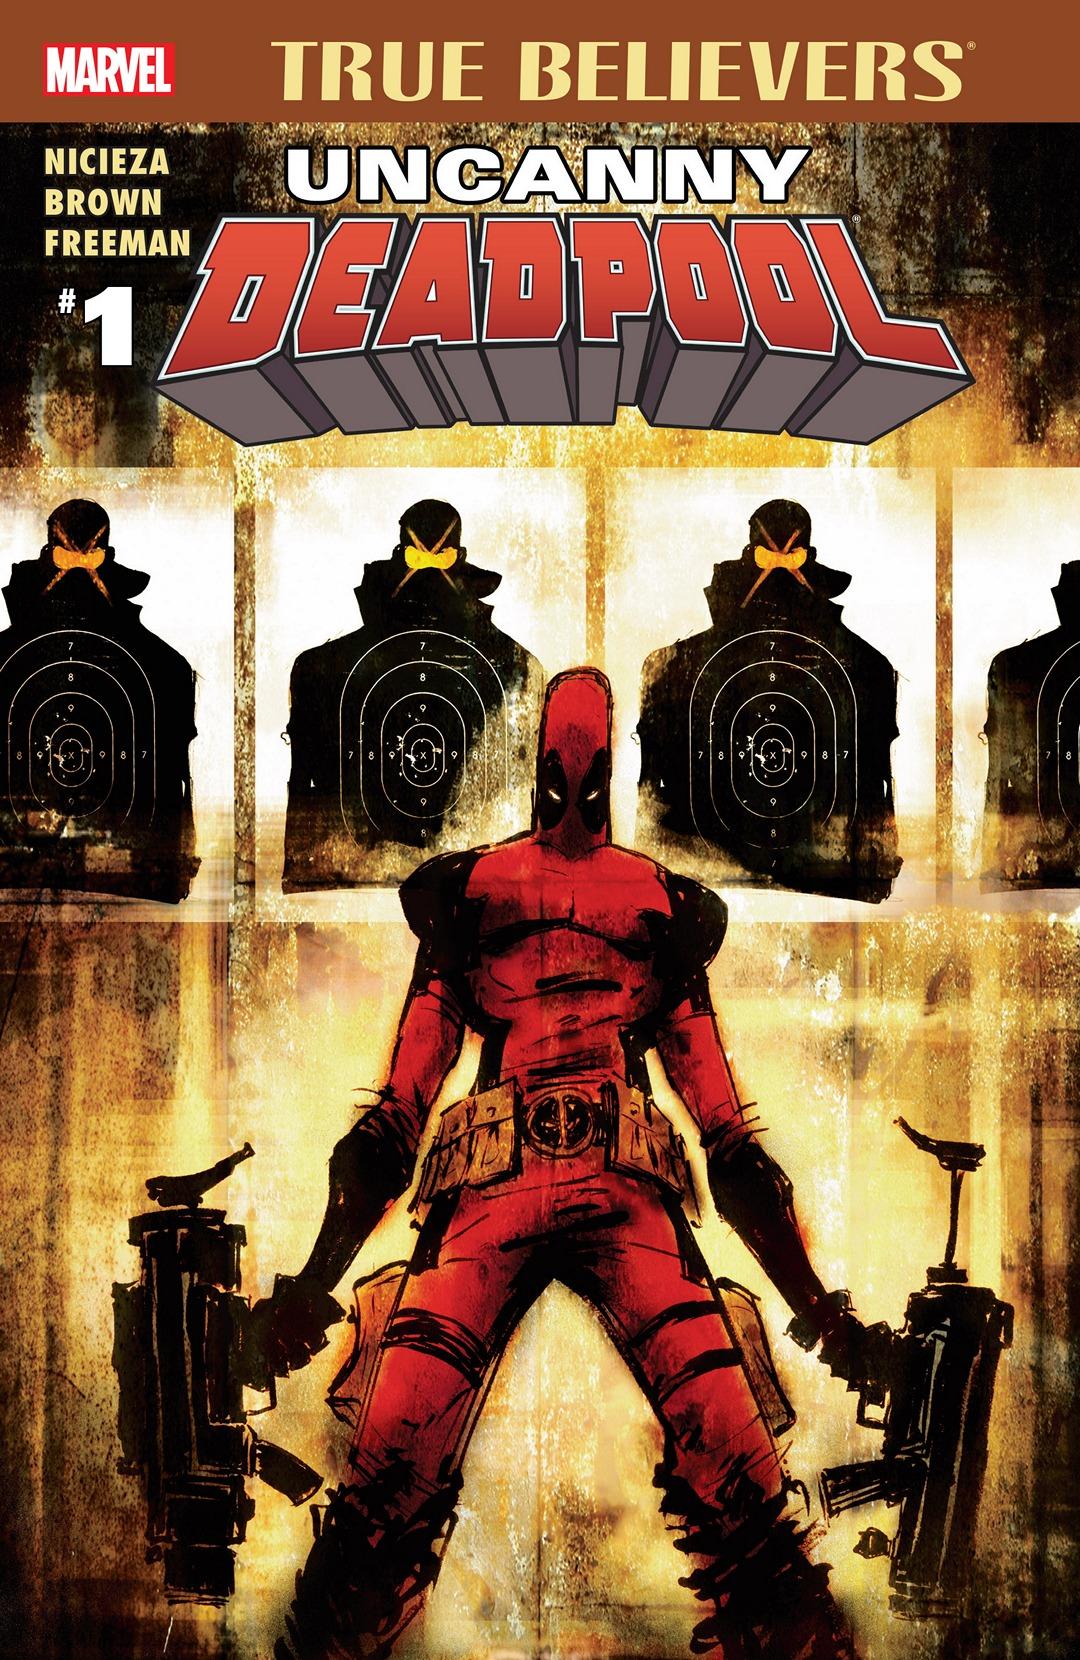 True Believers: Uncanny Deadpool Vol. 1 #1